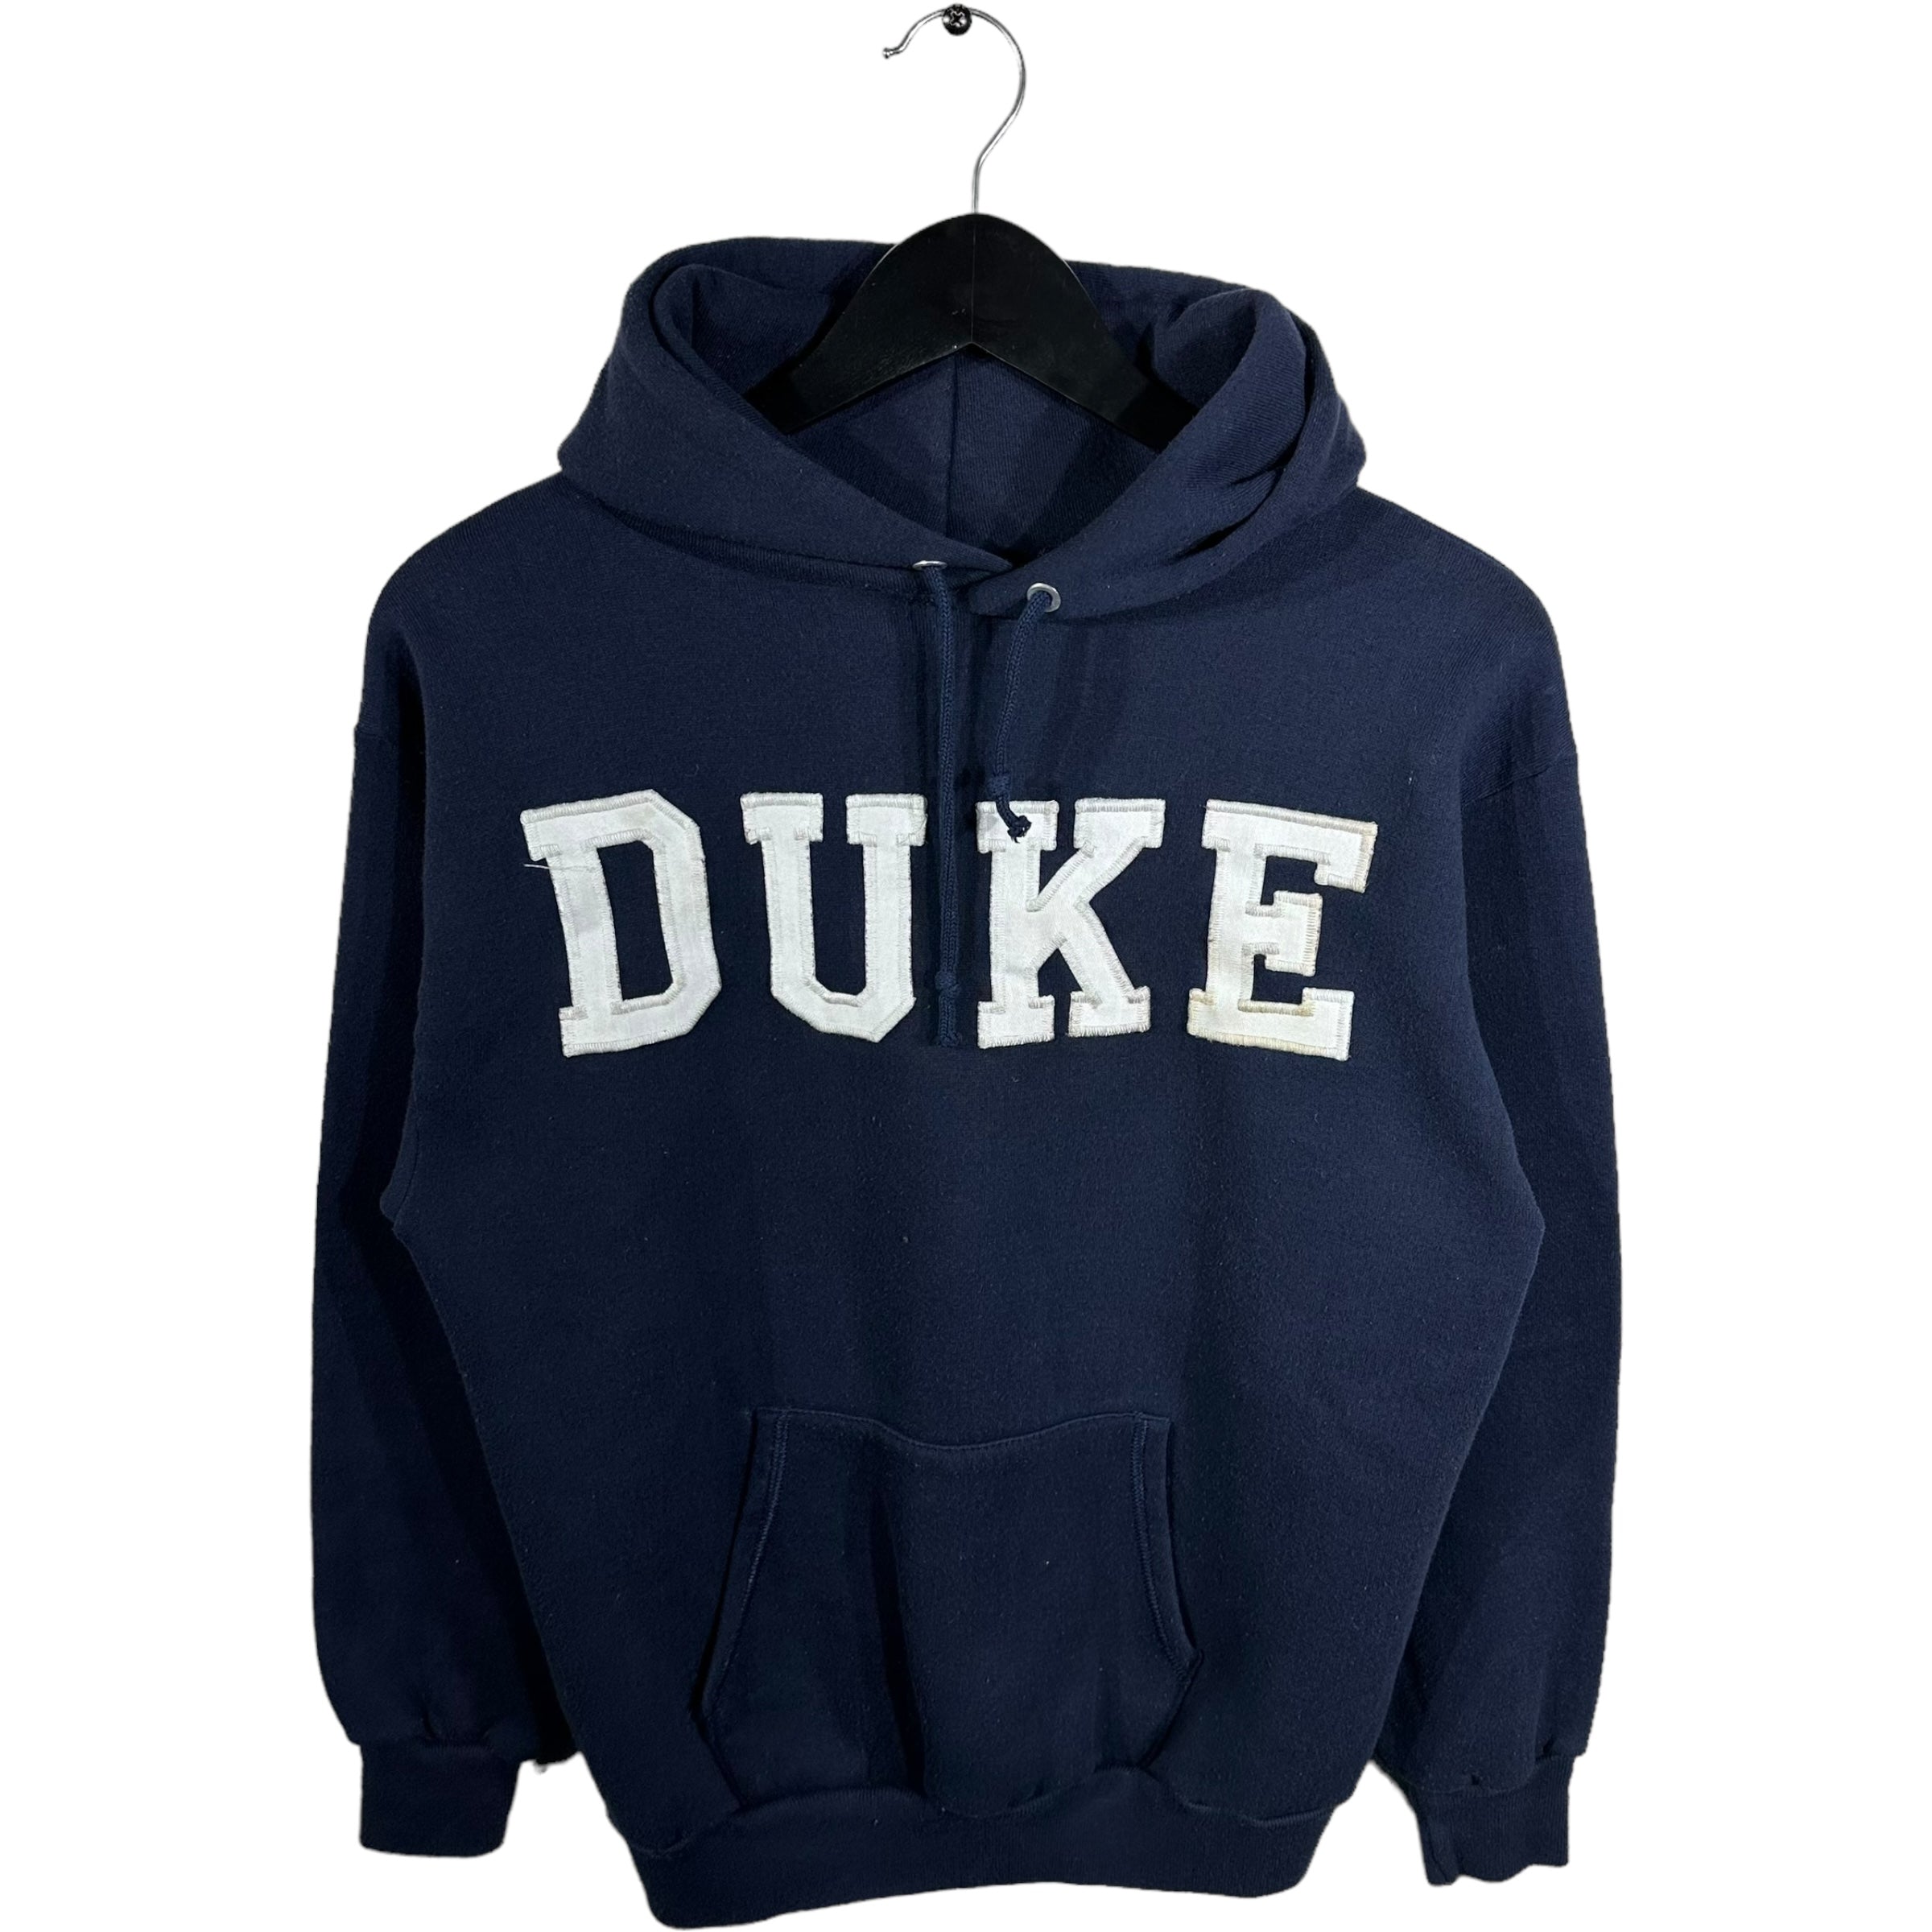 Vintage Duke University Hoodie